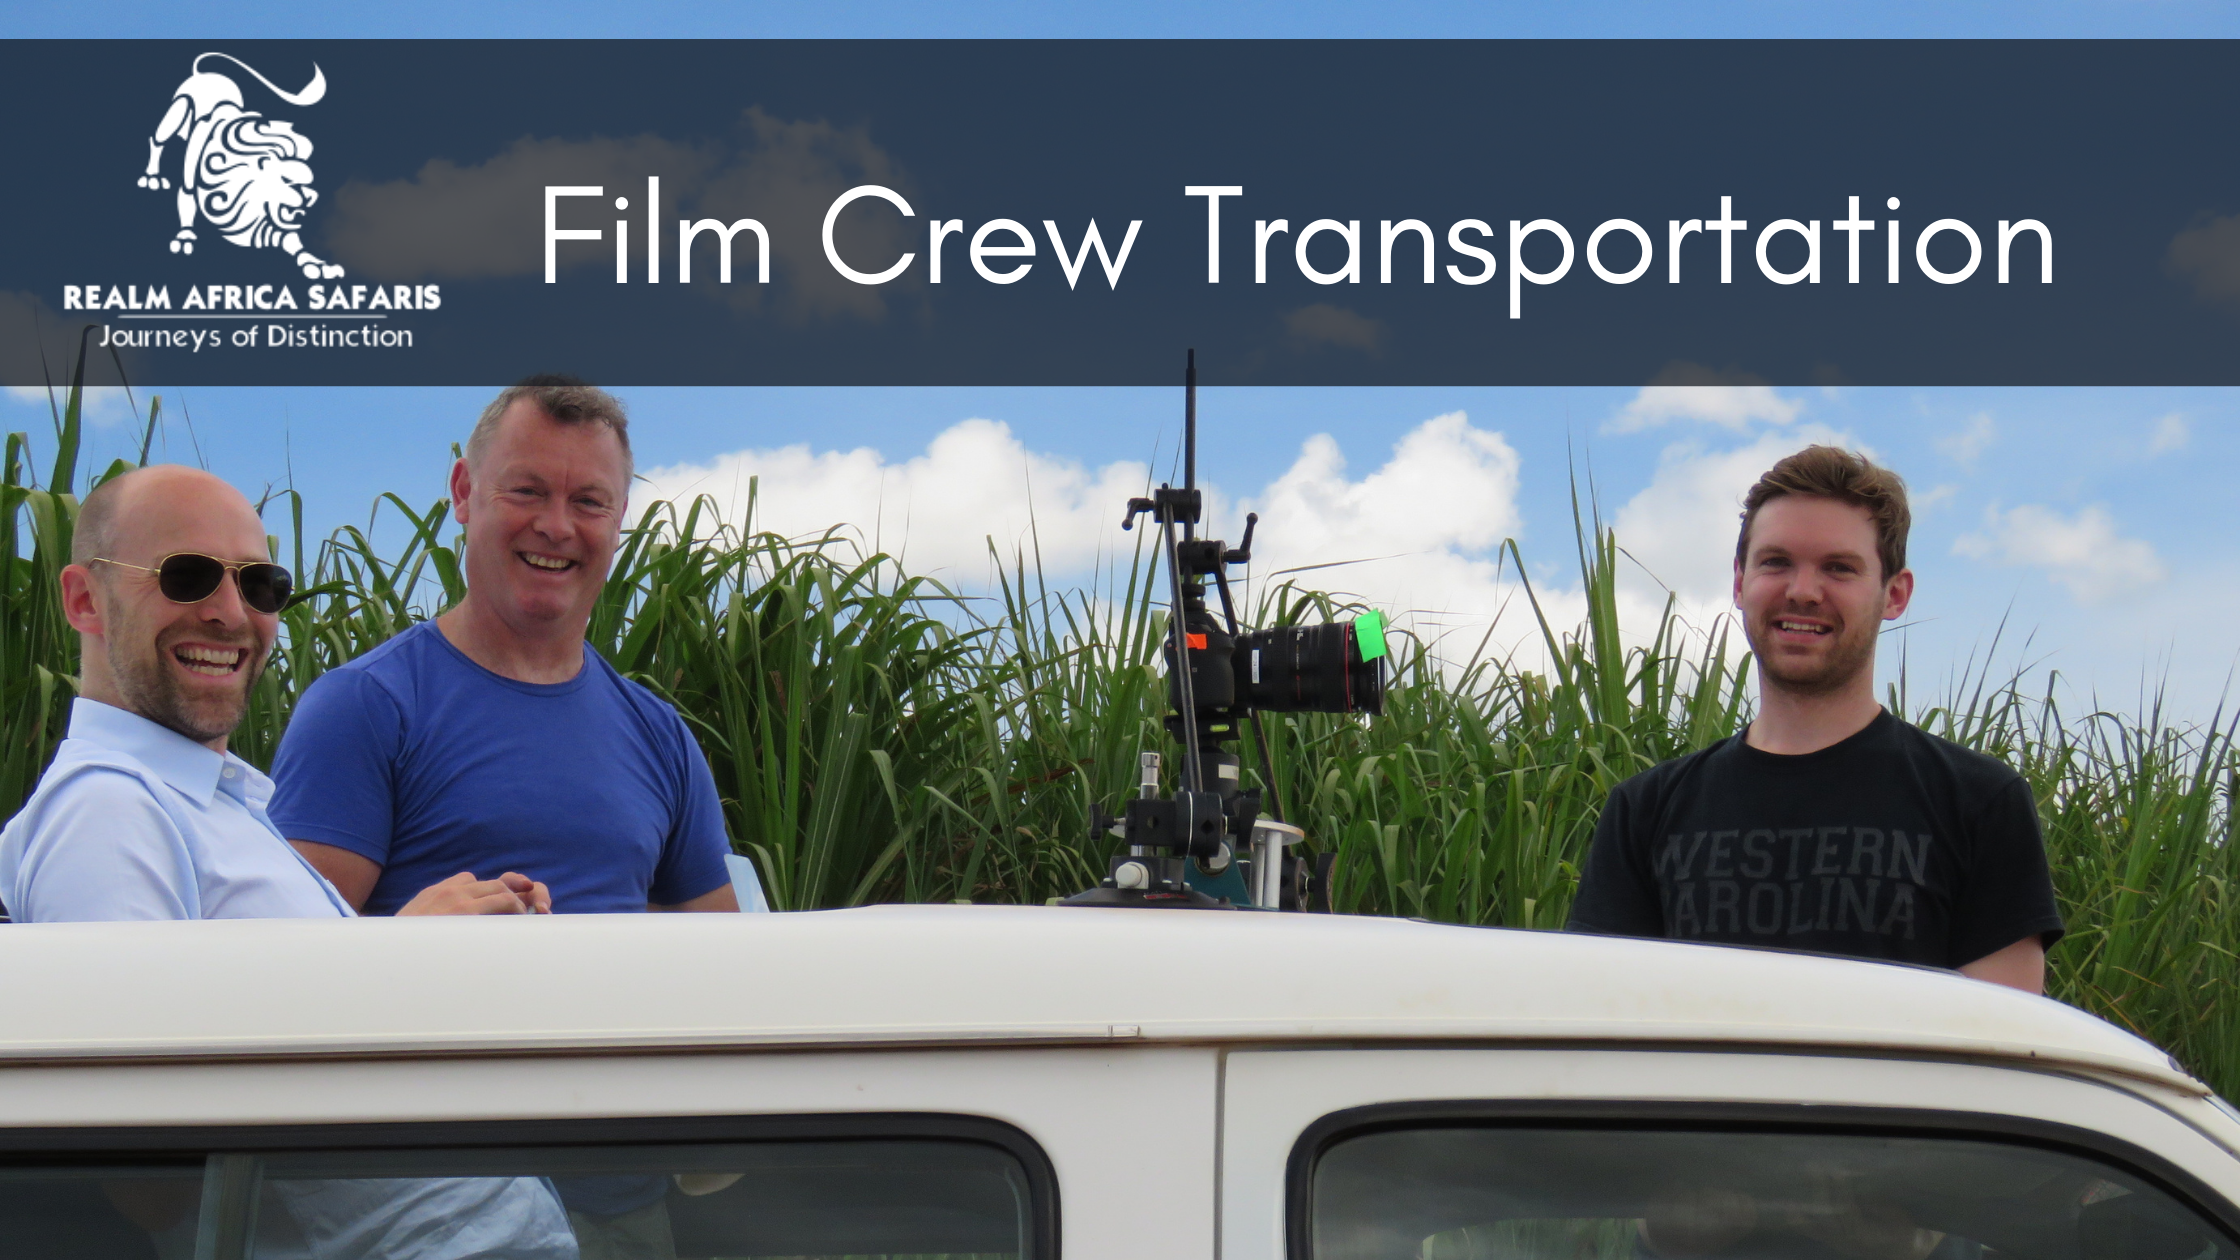 Film crew transportation